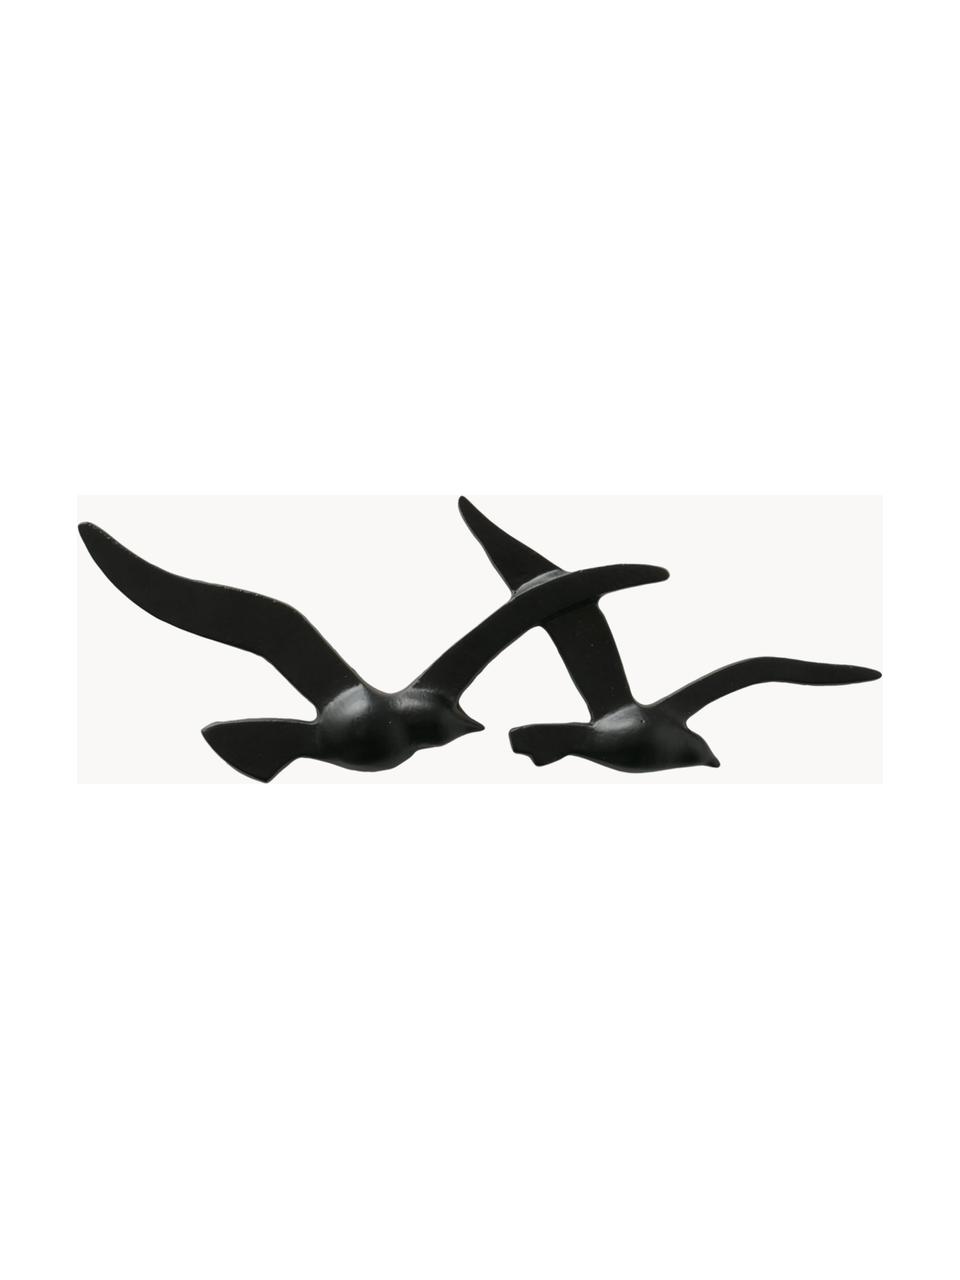 Metall-Wandobjekte Birdy in Vögelform, 2er-Set, Metall, beschichtet, Schwarz, Set mit verschiedenen Grössen